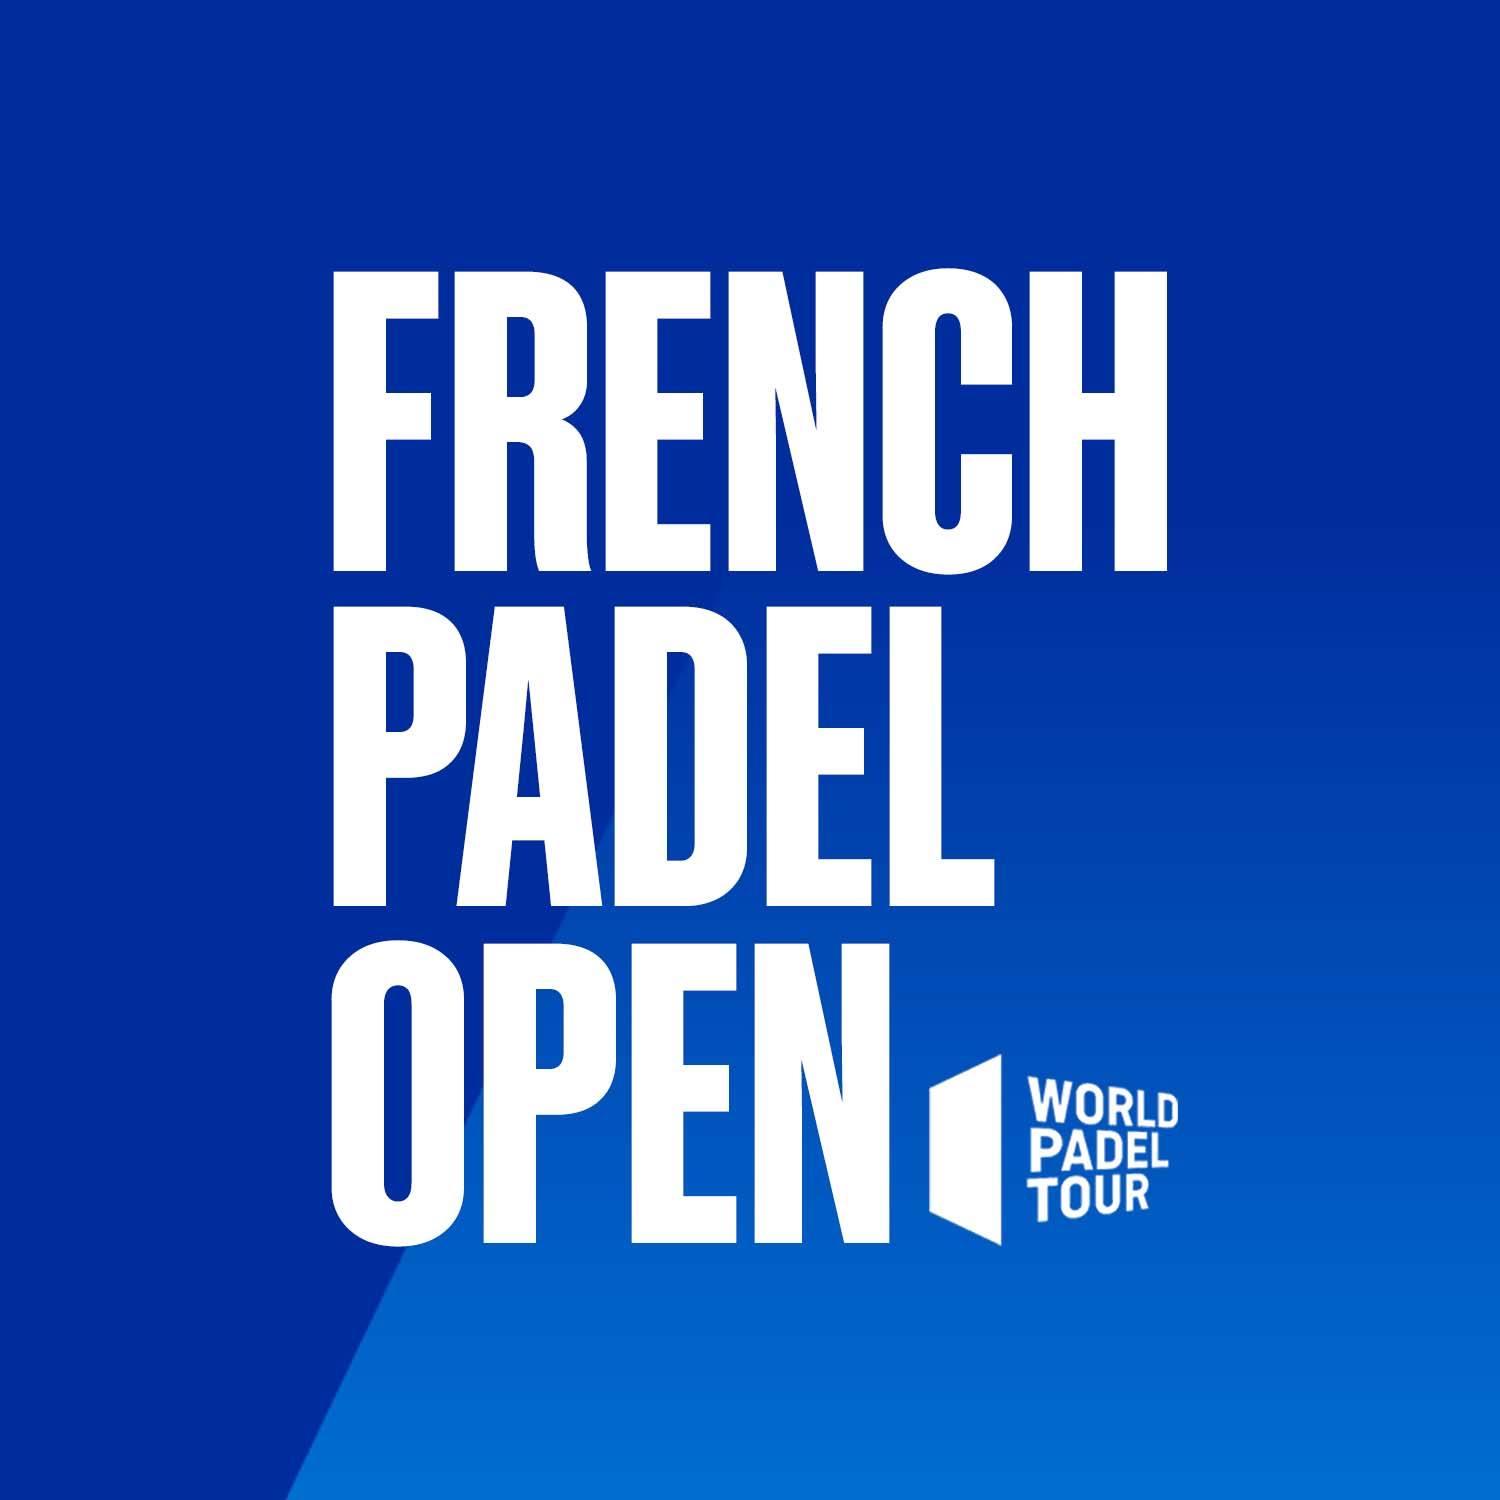 World Padel Tour French Open: Biljettkontoret öppnar snart